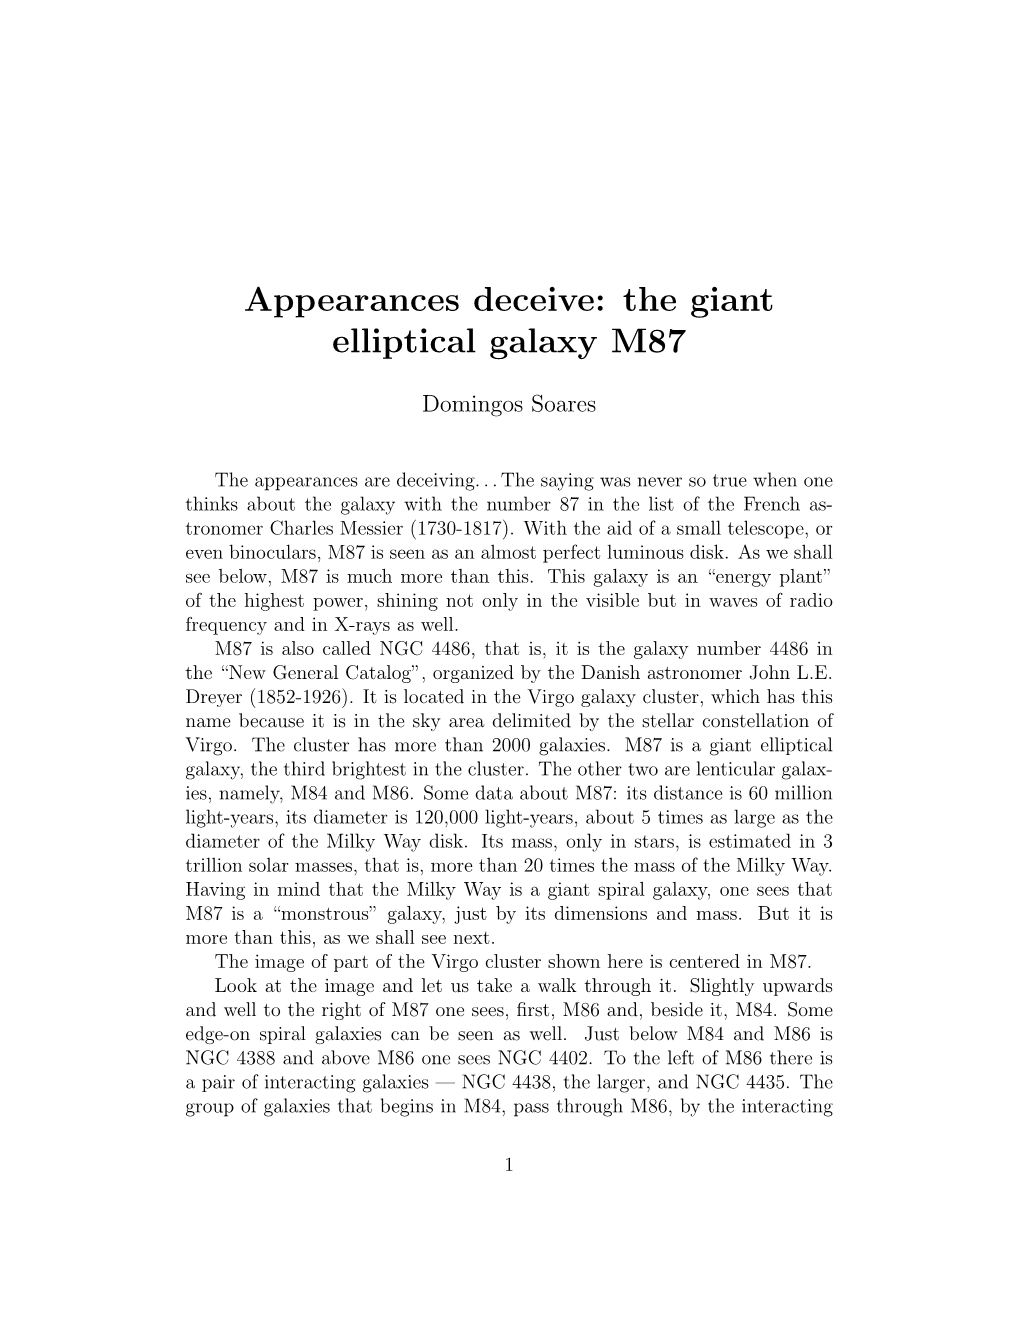 Appearances Deceive: the Giant Elliptical Galaxy M87